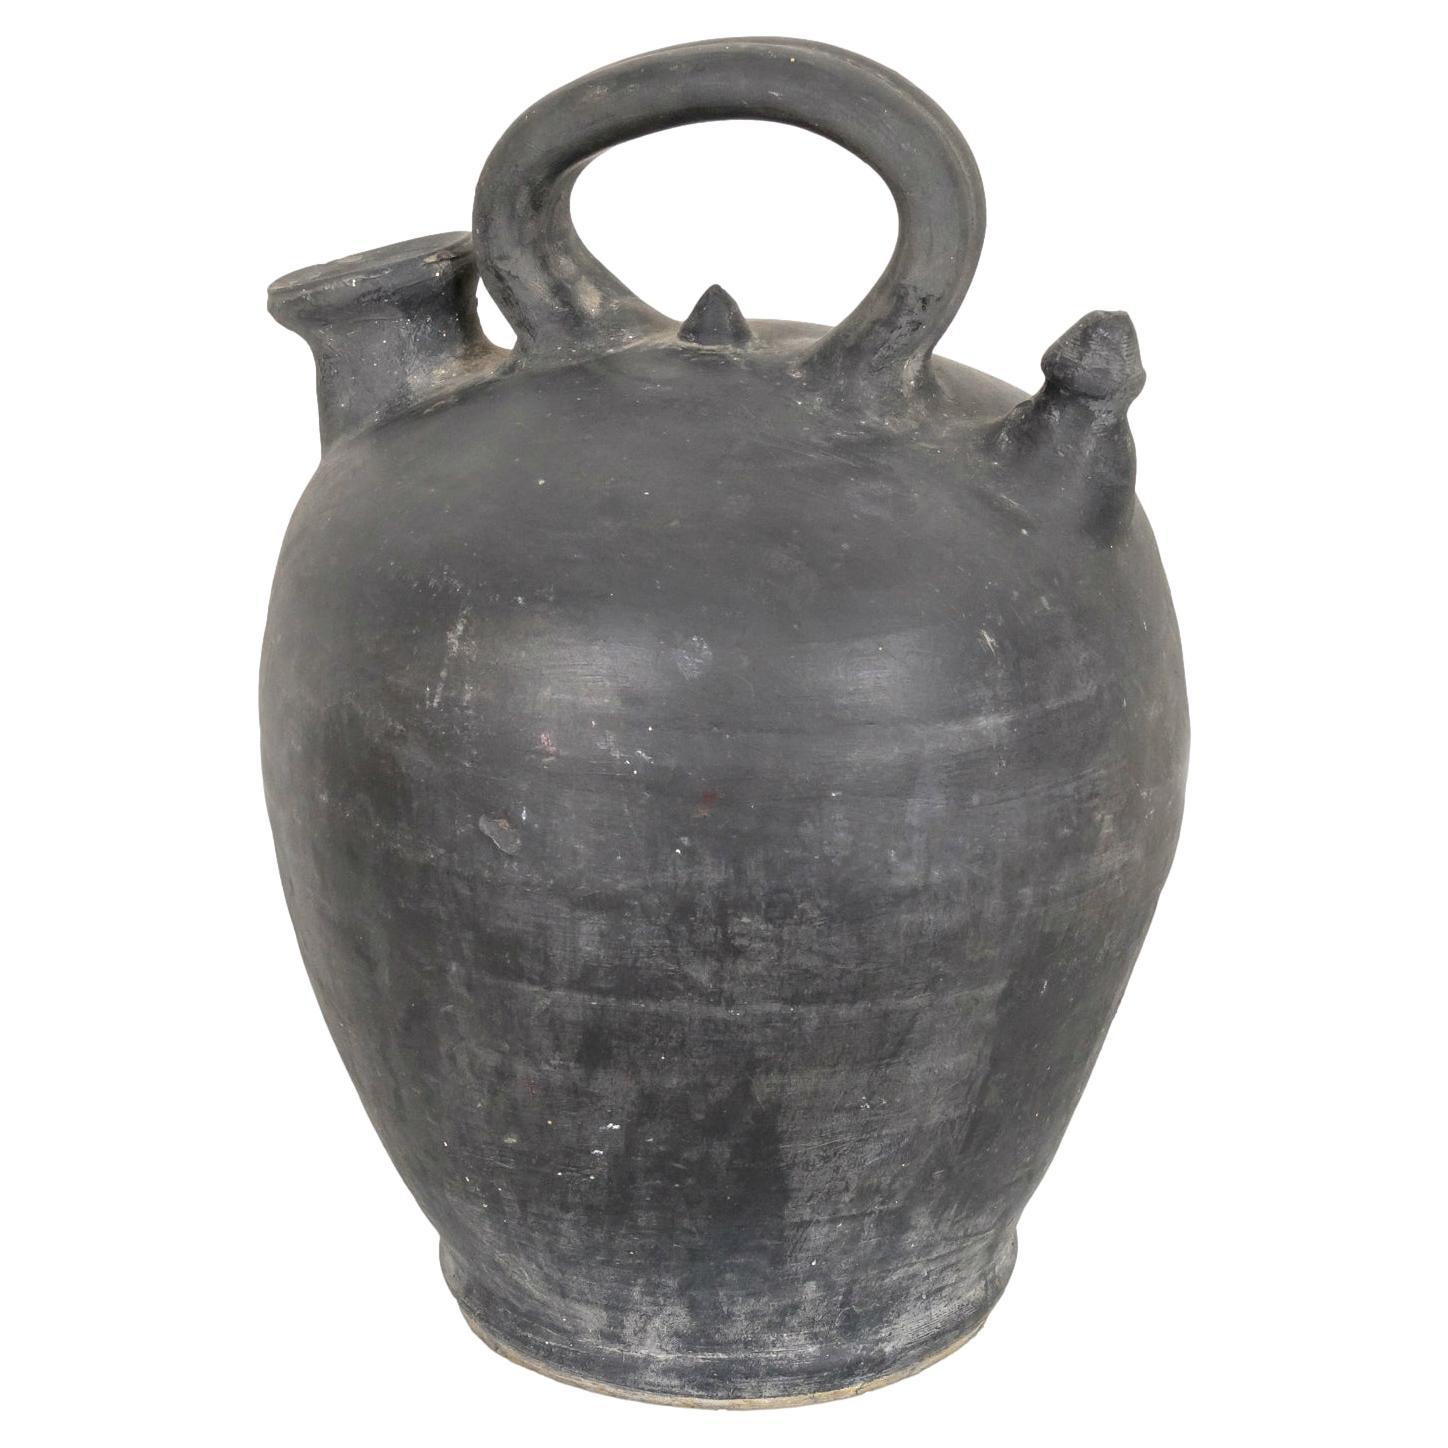 19th Century Spanish Catalan Black Clay Botijo or Water Jug from Verdu